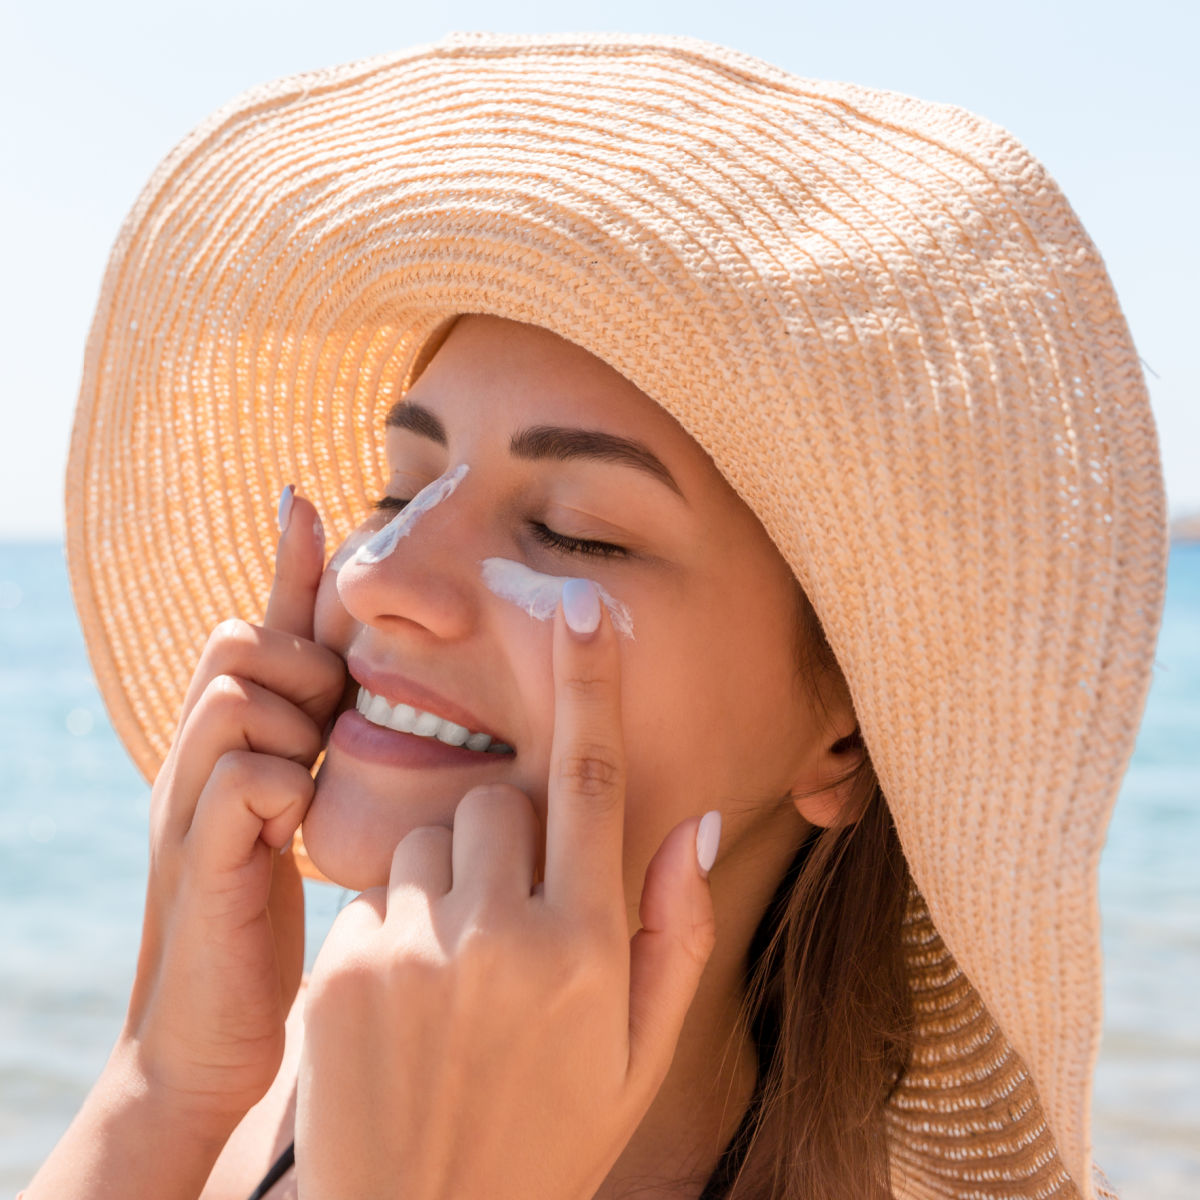 Woman putting on sunscreen.